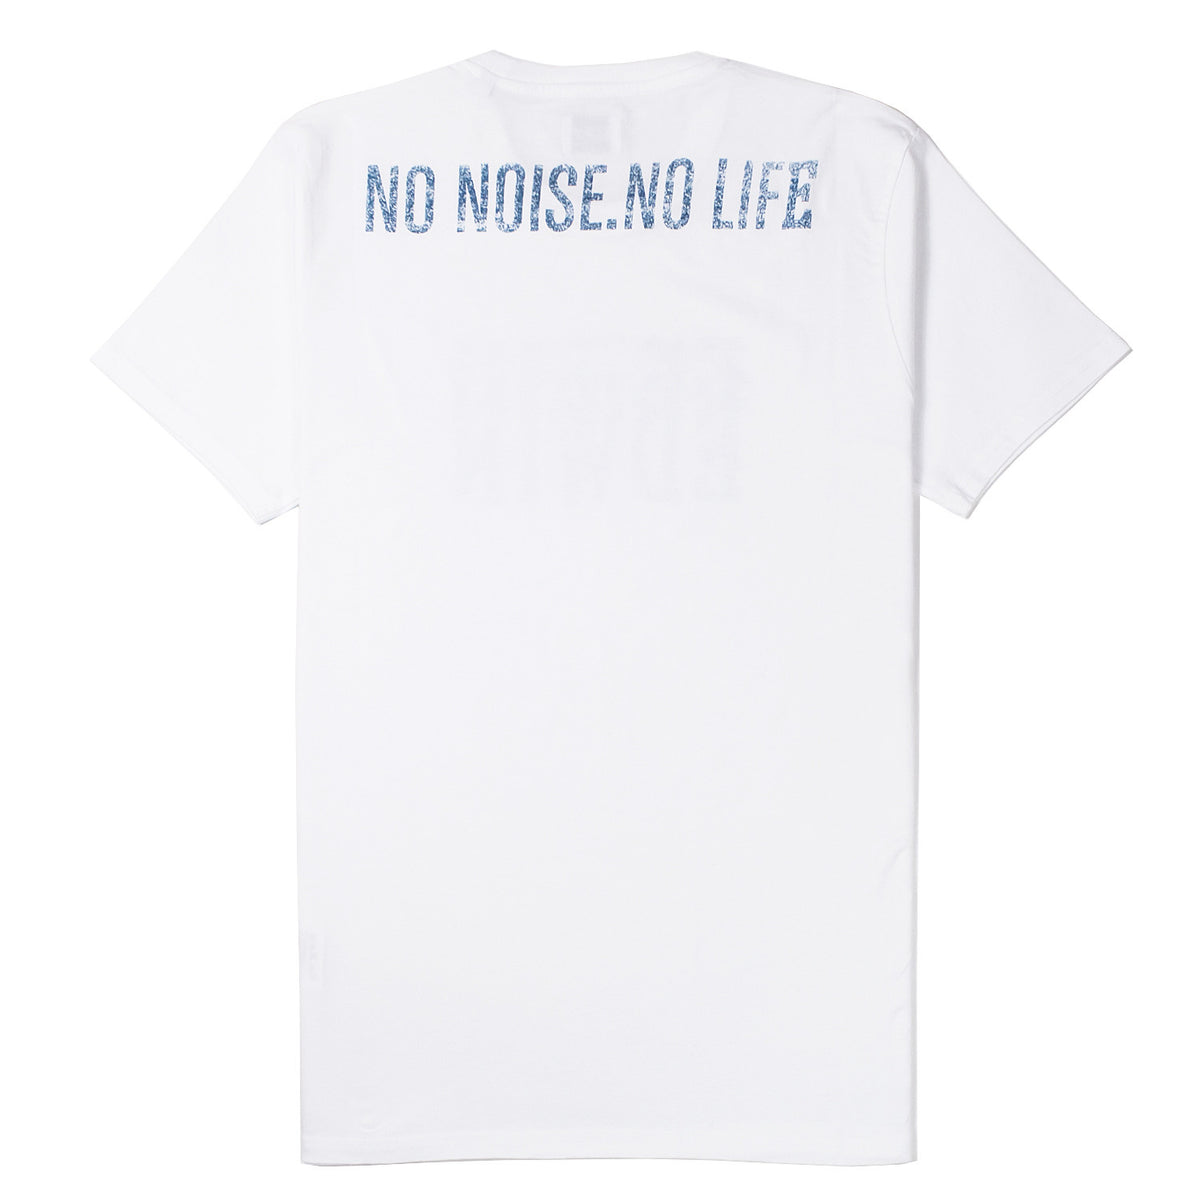 Edwin - No Noise No Life Tee - White